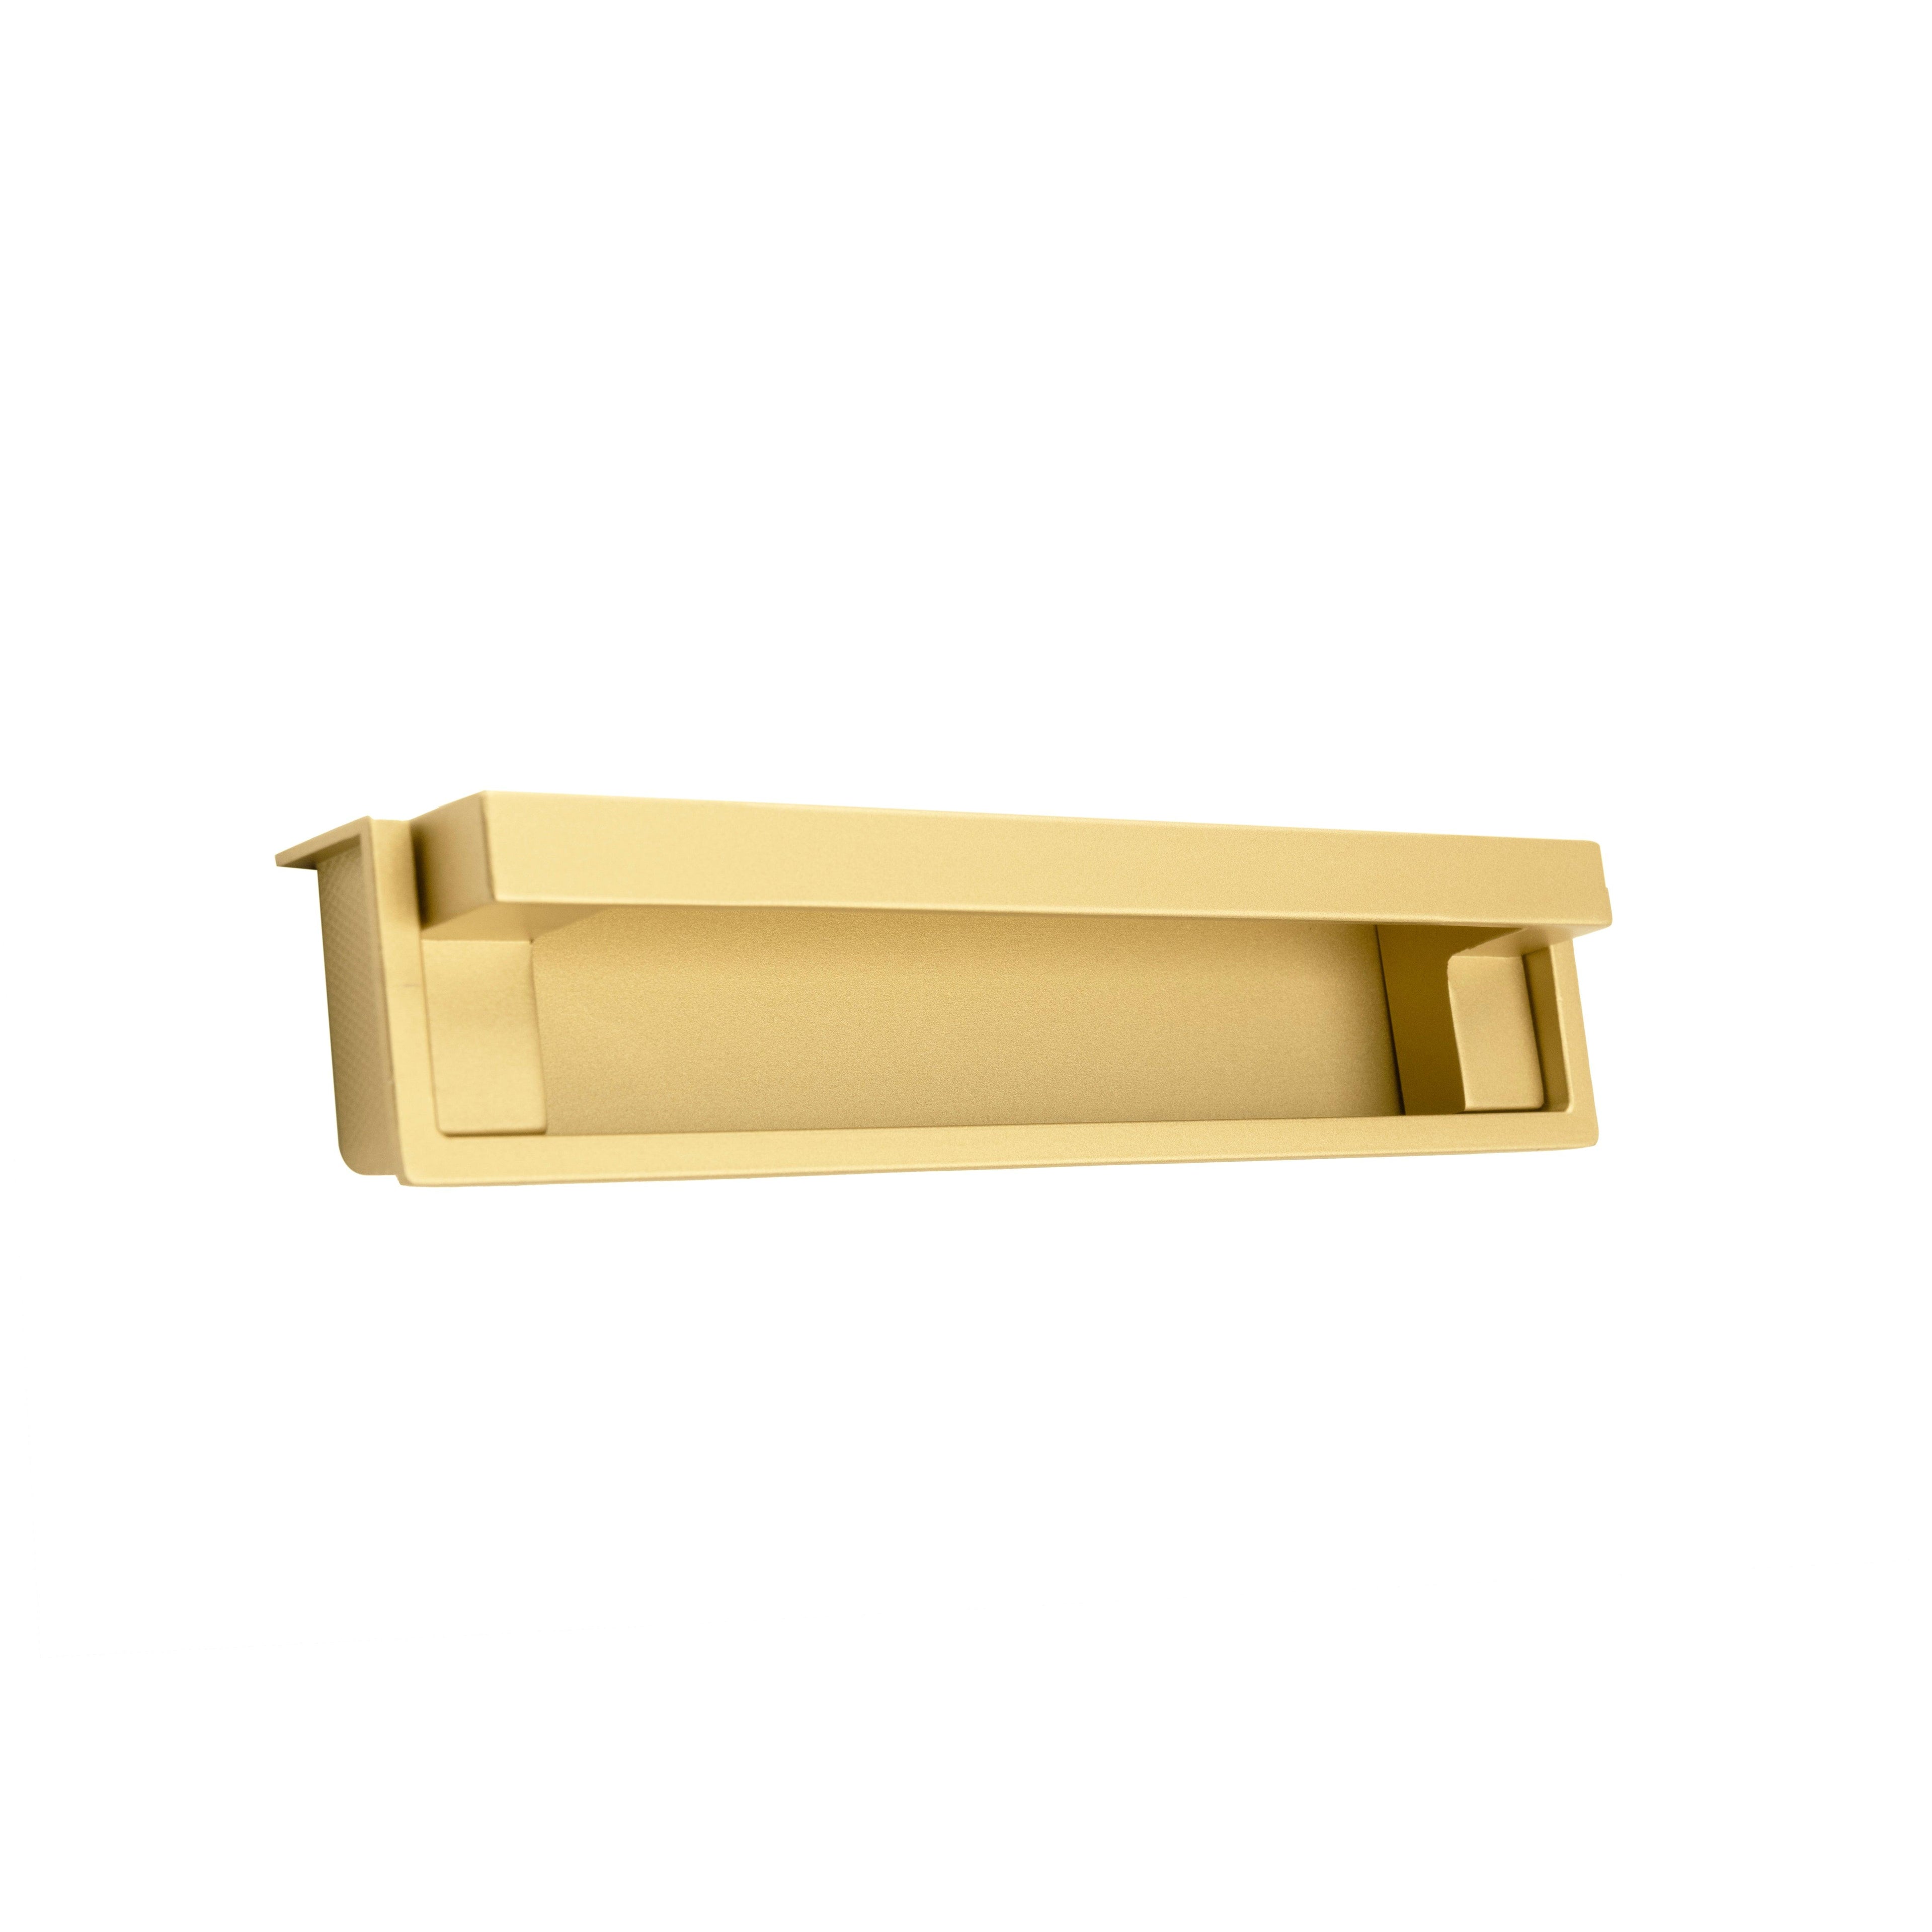 Concealed Slender Handle Handles 150mm / Gold / Zinc Alloy - M A N T A R A